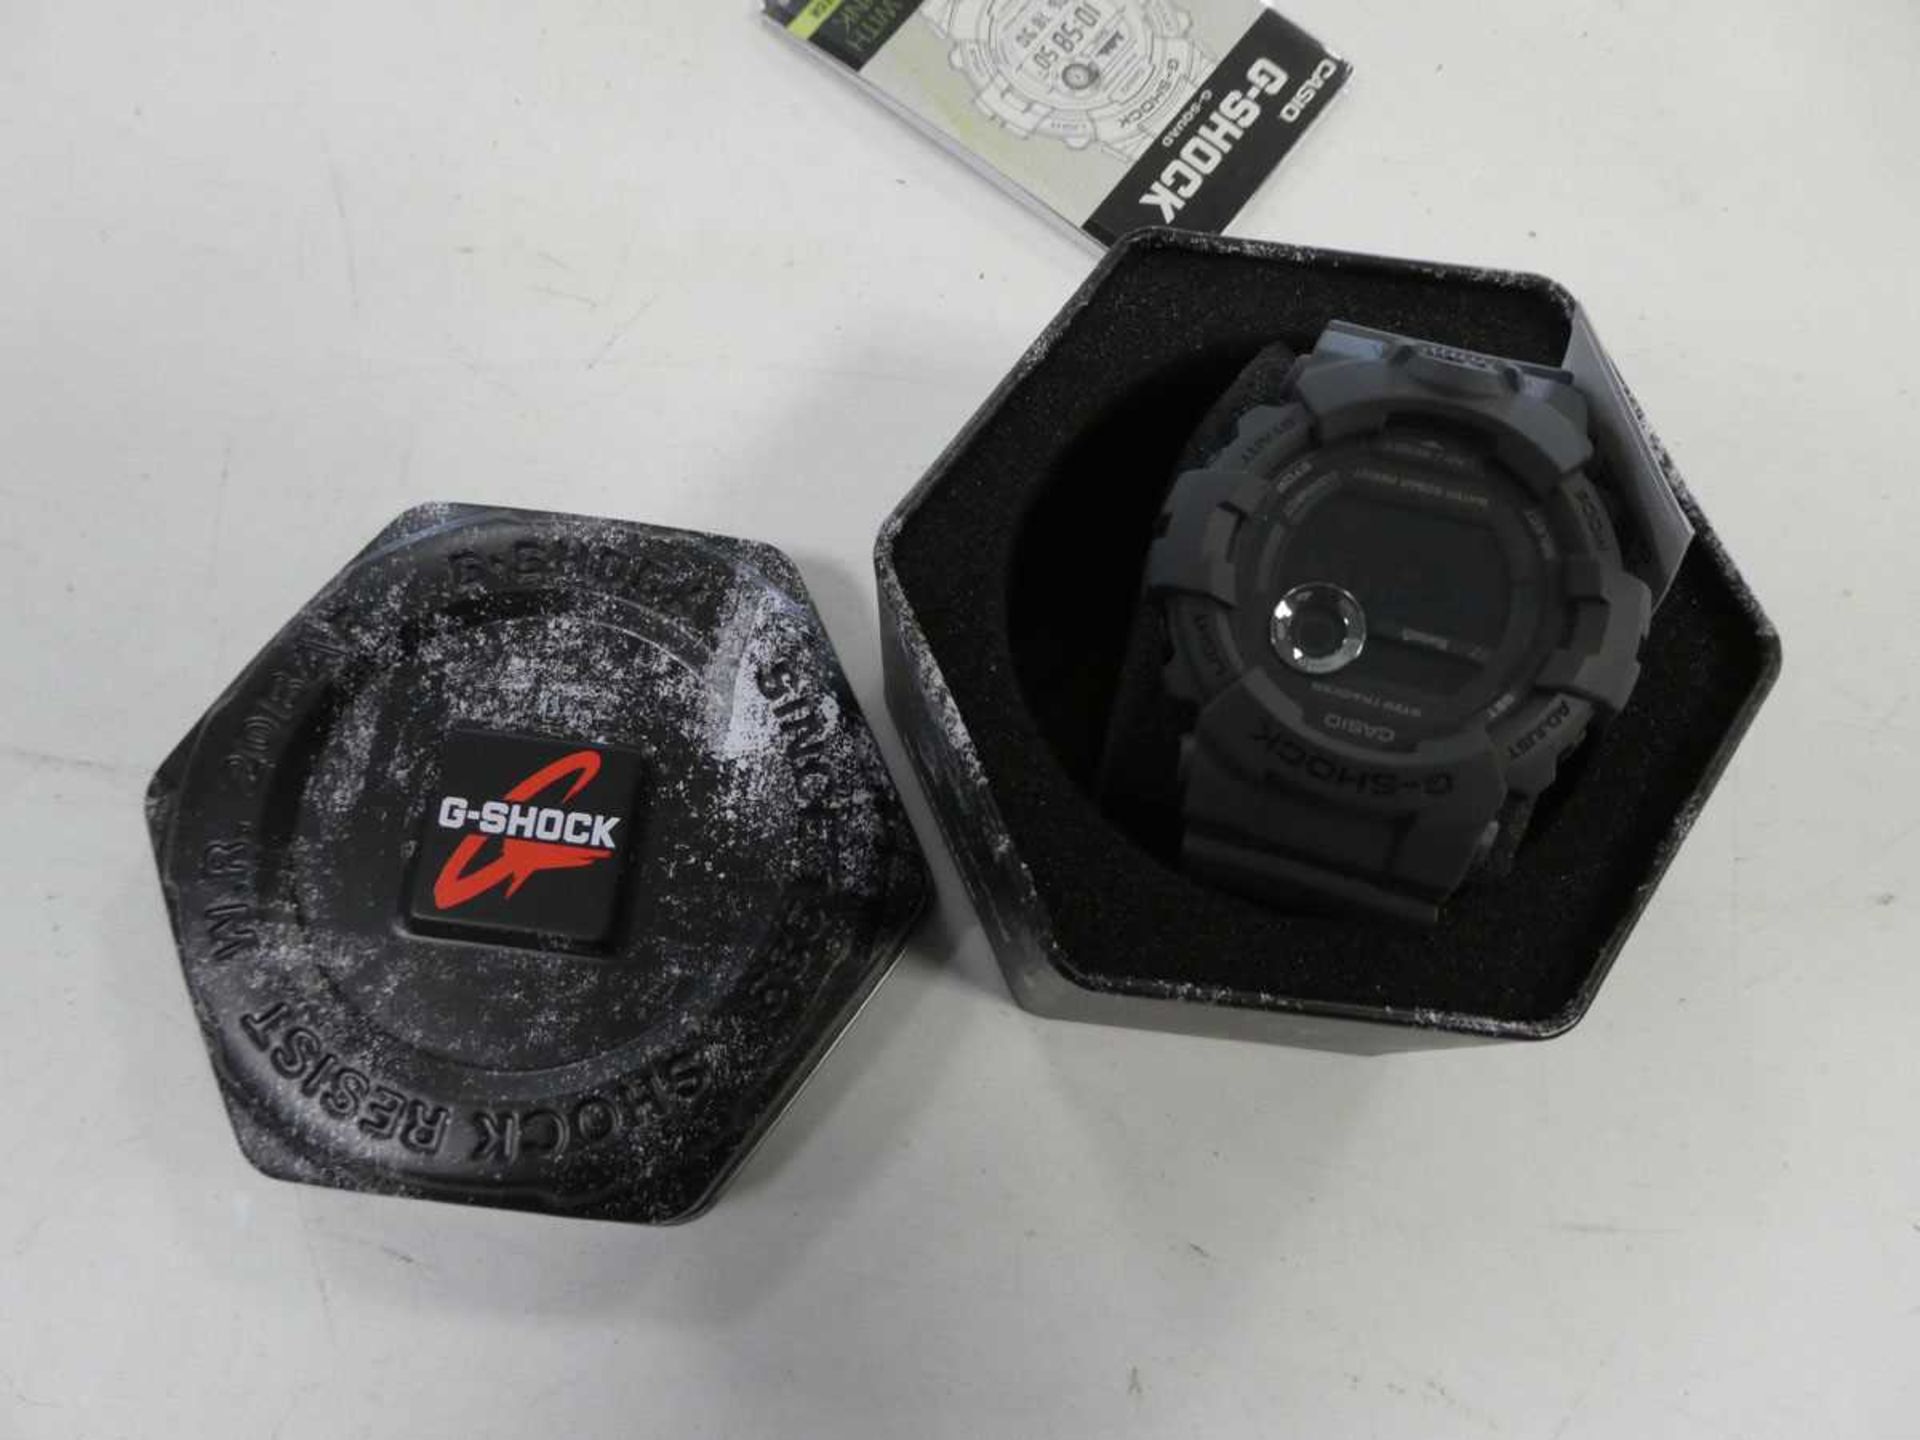 Boxed Casio G-Shock wristwatch with black strap